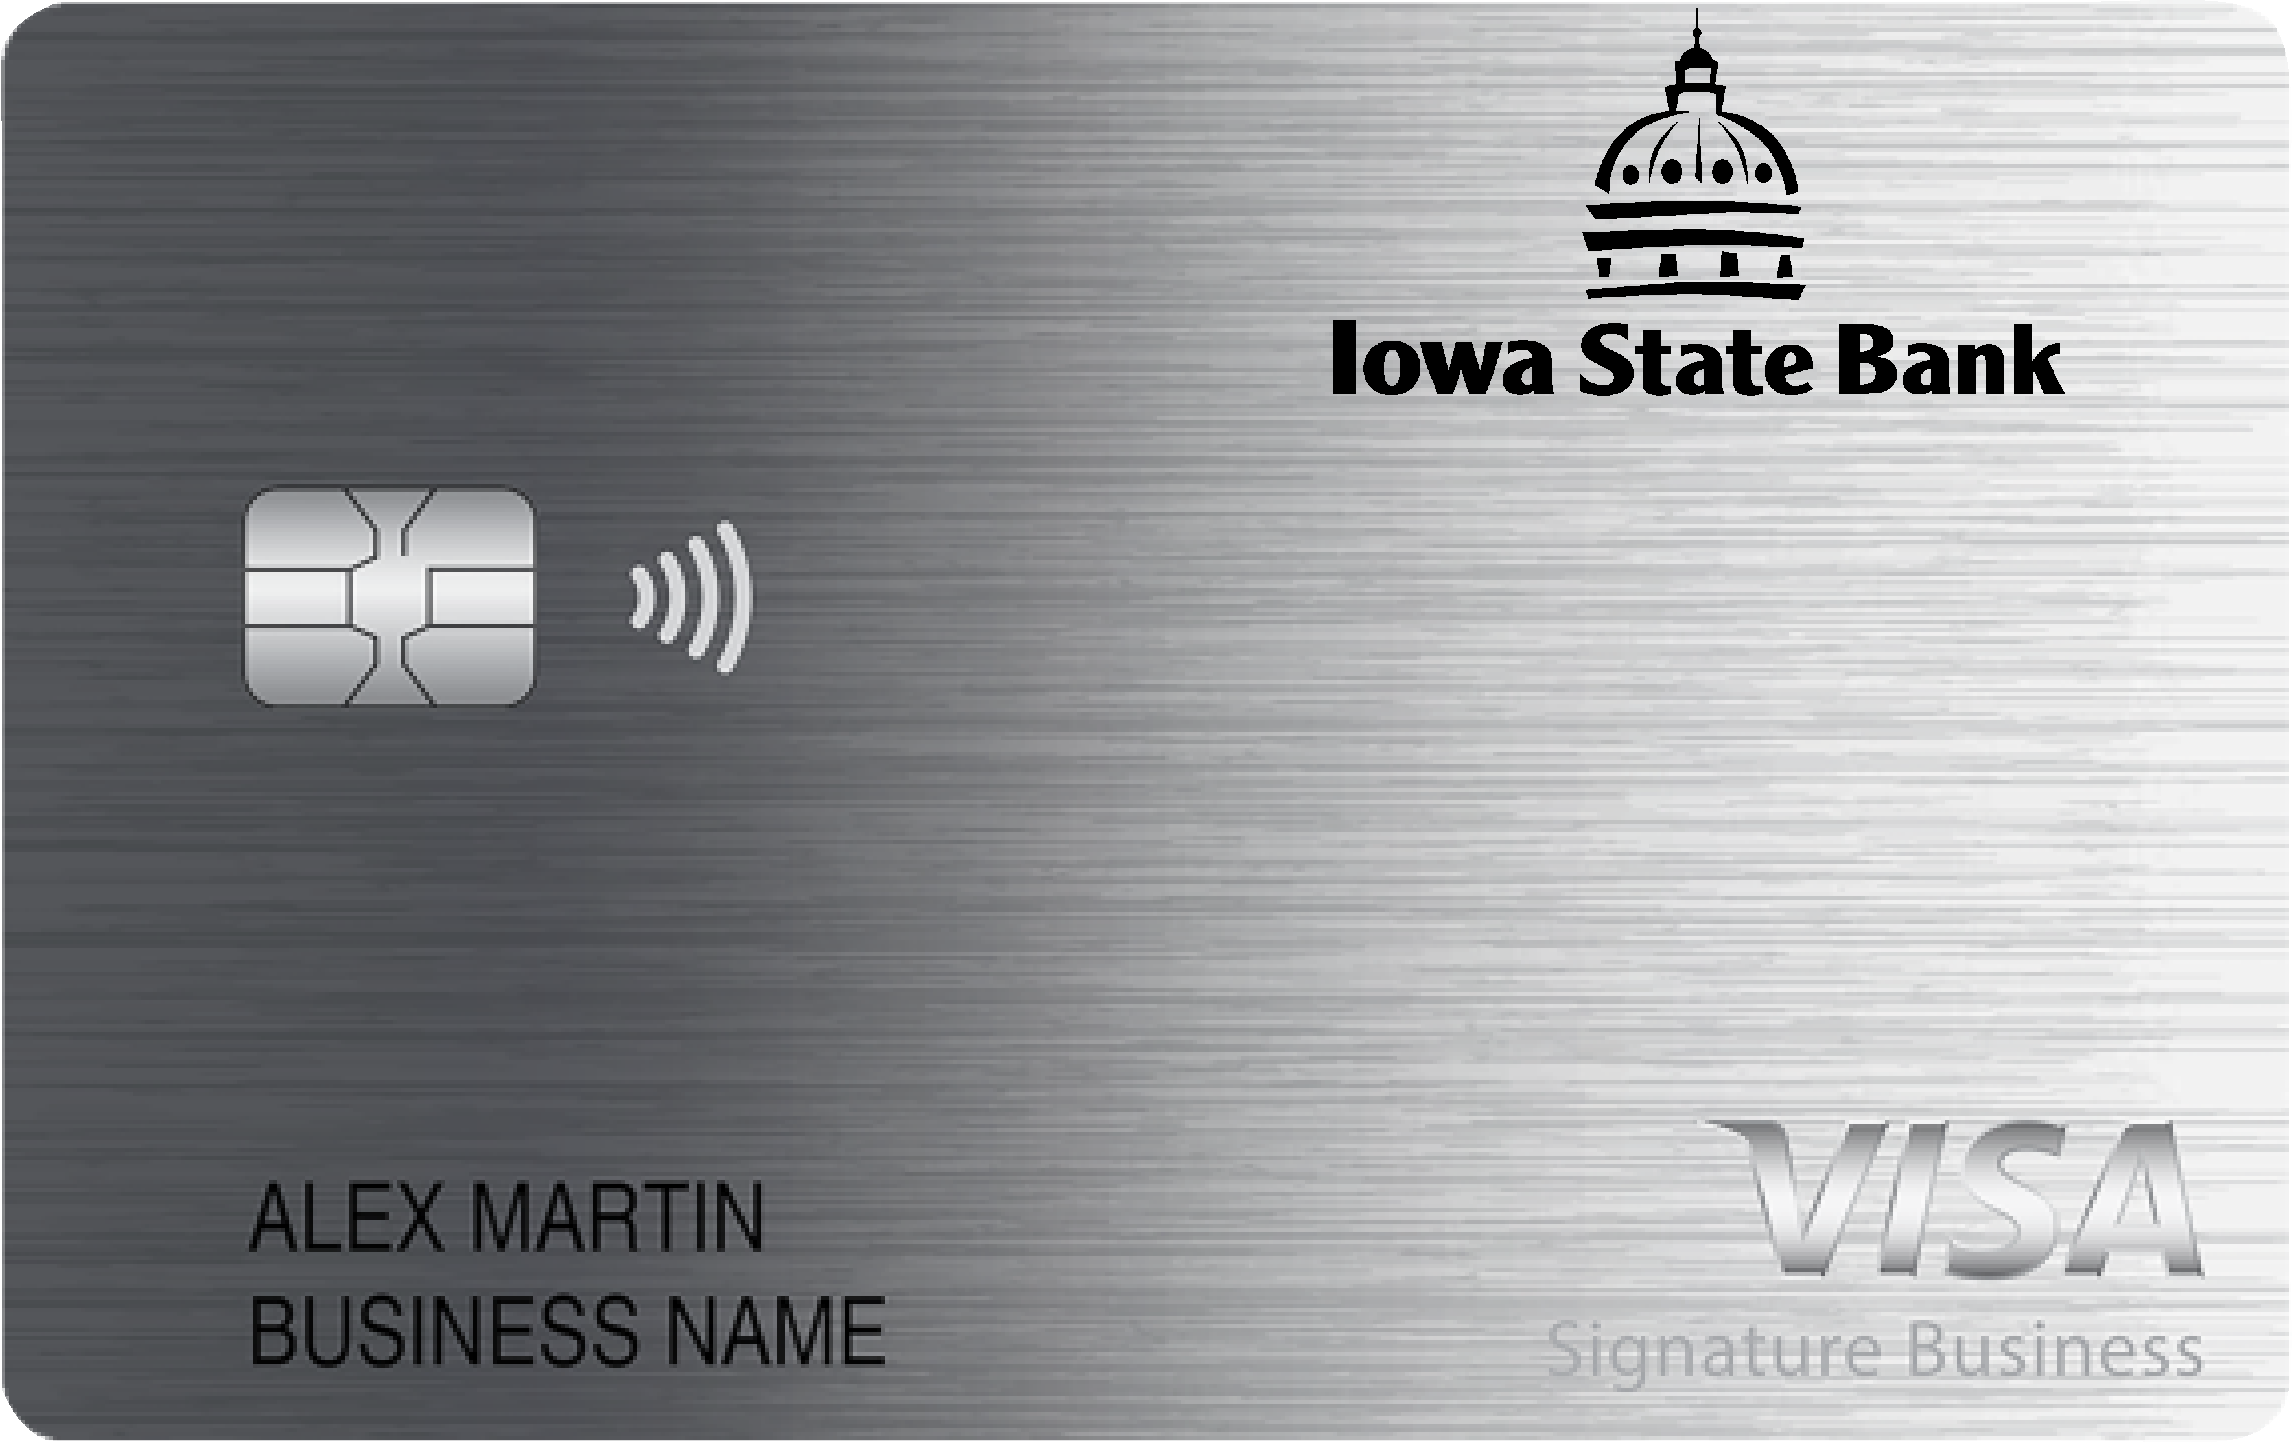 Iowa State Bank Smart Business Rewards Card